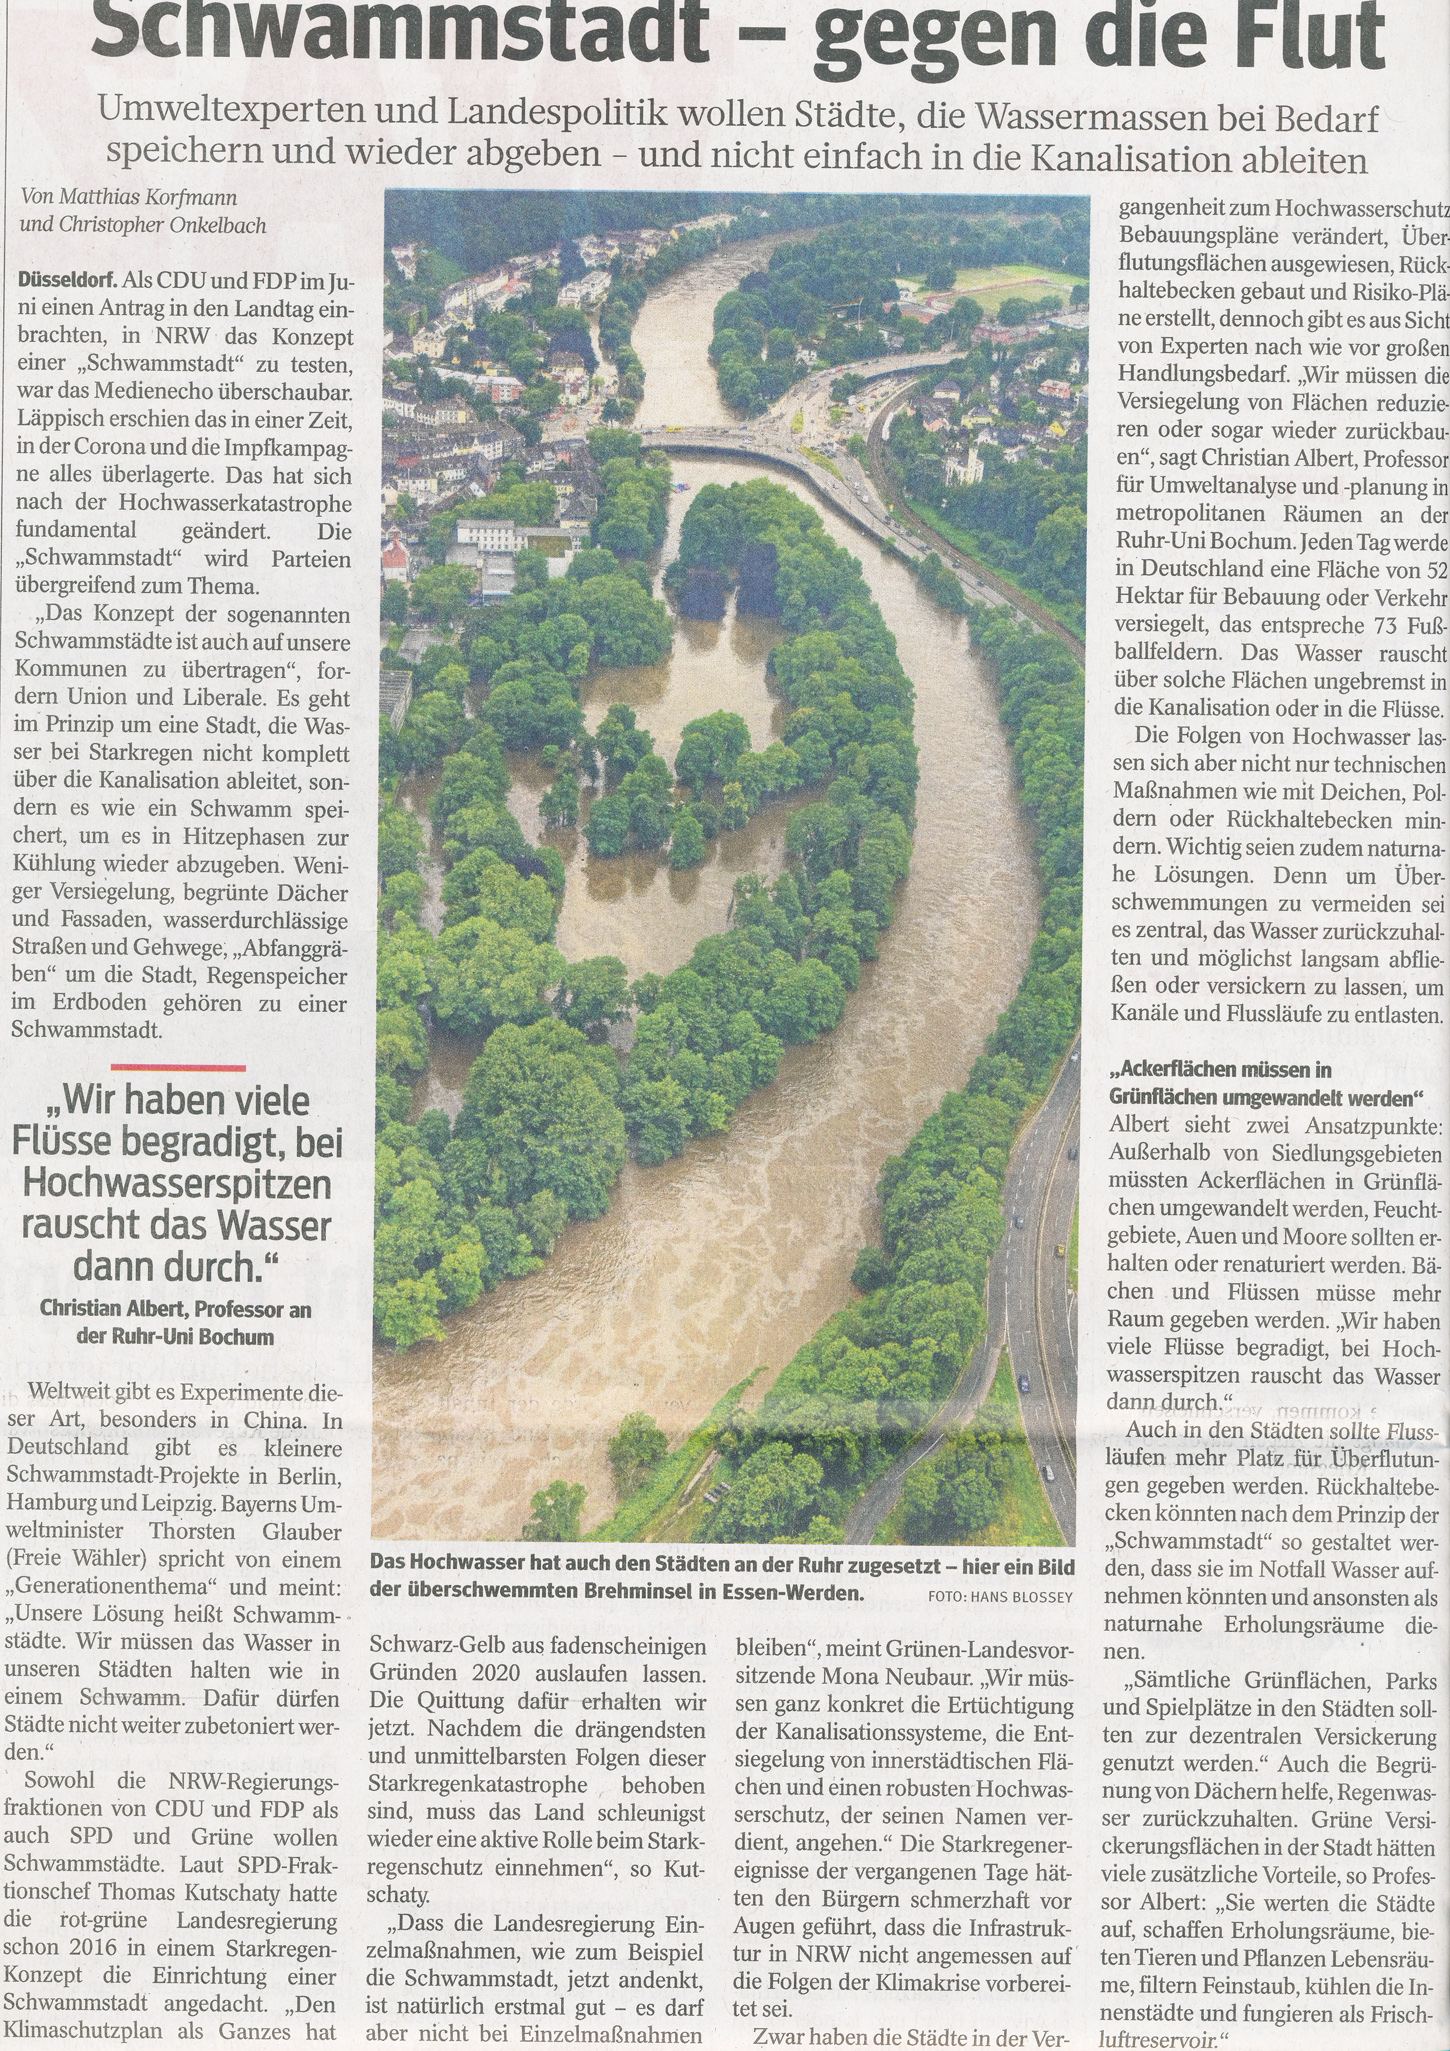 WAZ: Schwammstadt gegen die Flut.jpg